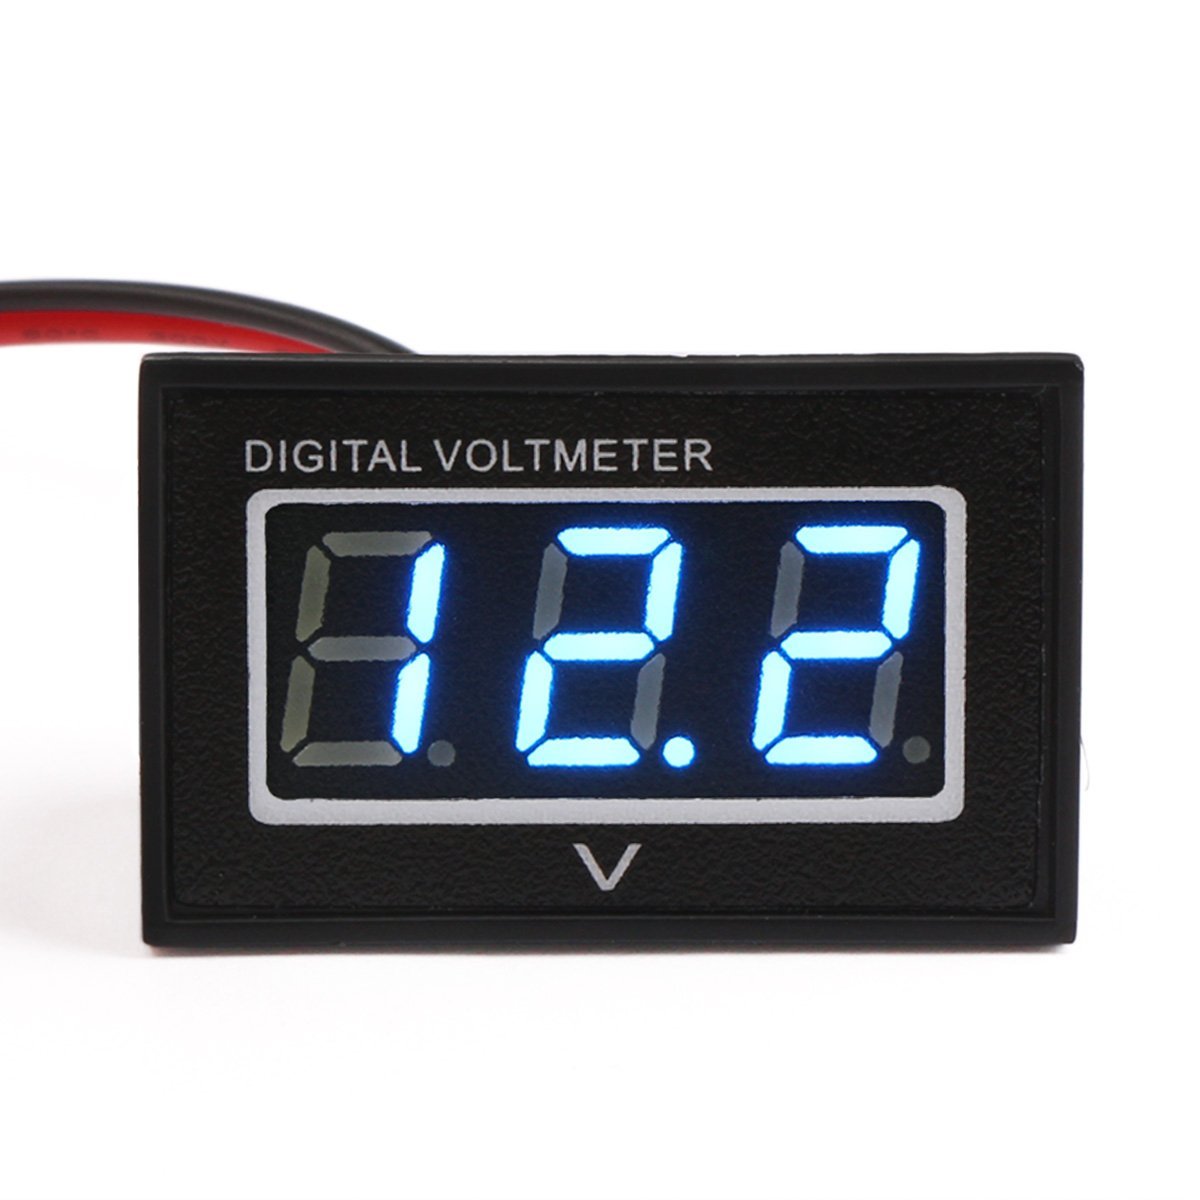 dc voltmeter